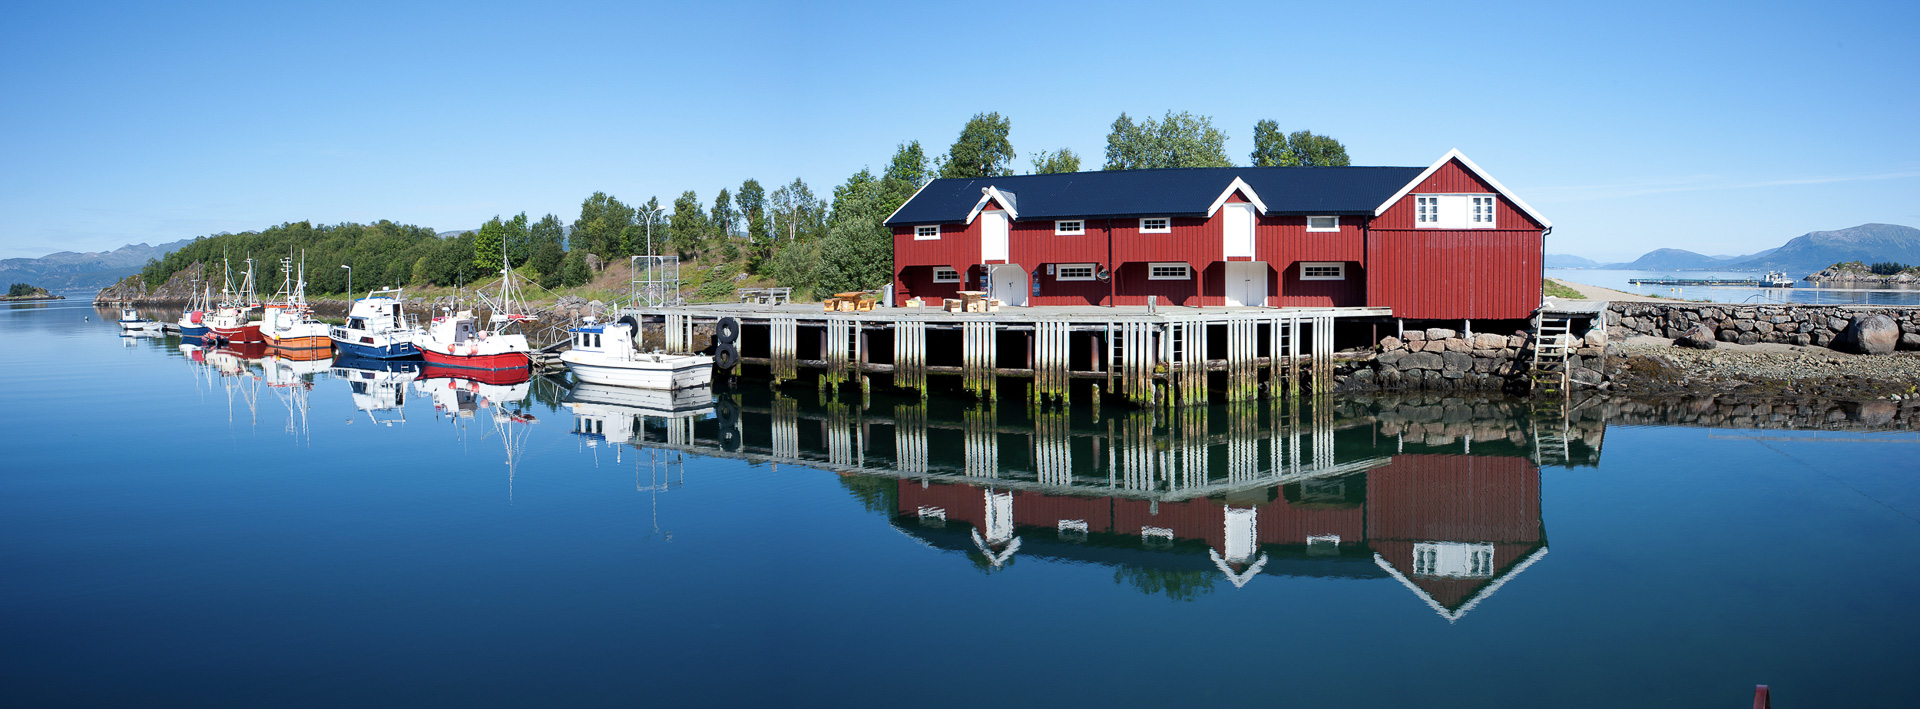 Set amongst sheltered waters, perfect conditions for fishing © Akvakultur i Vesterålen